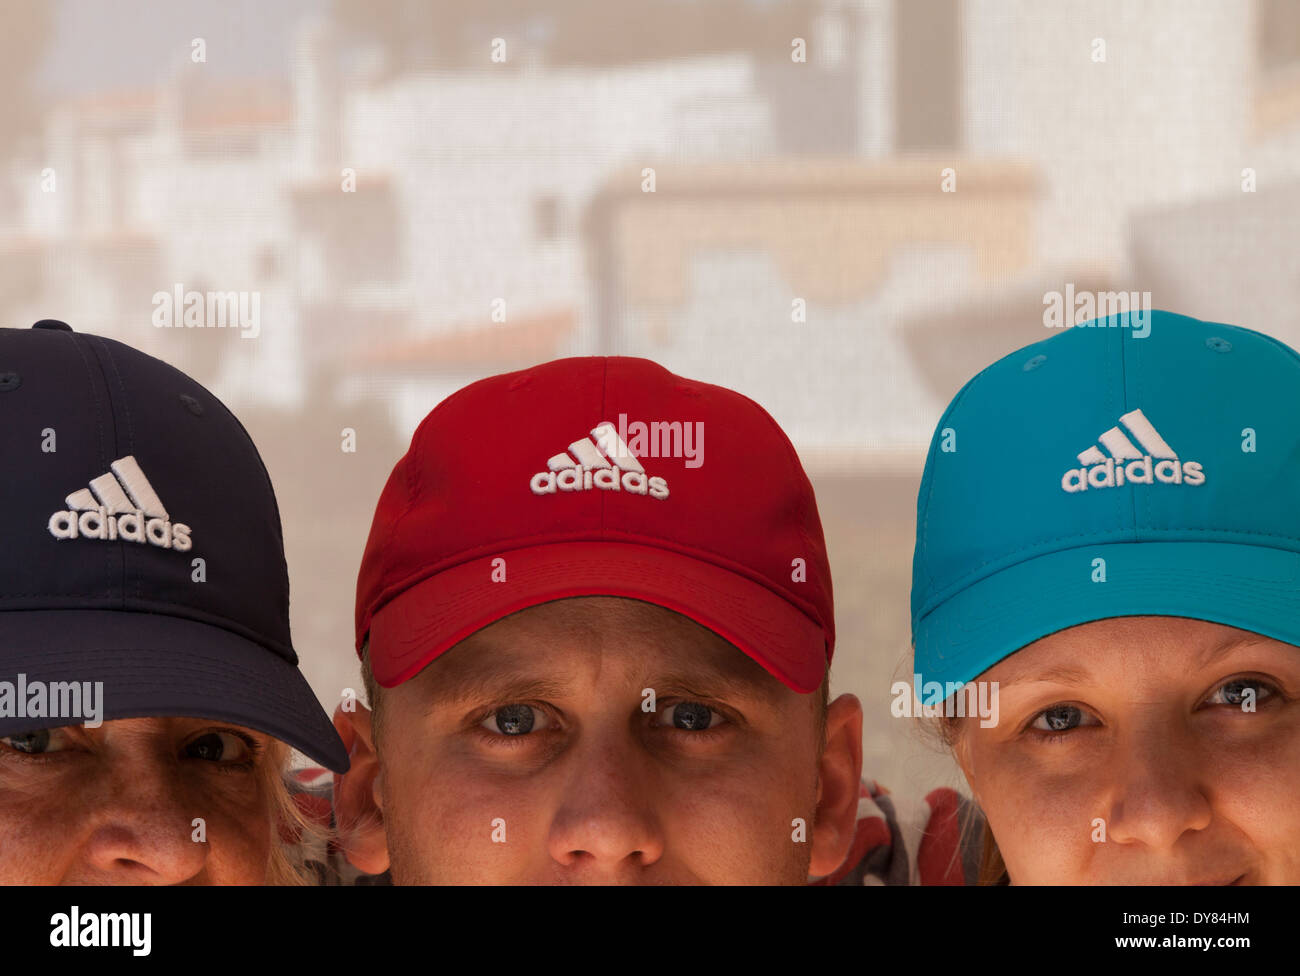 Adidas colours Stock Photo